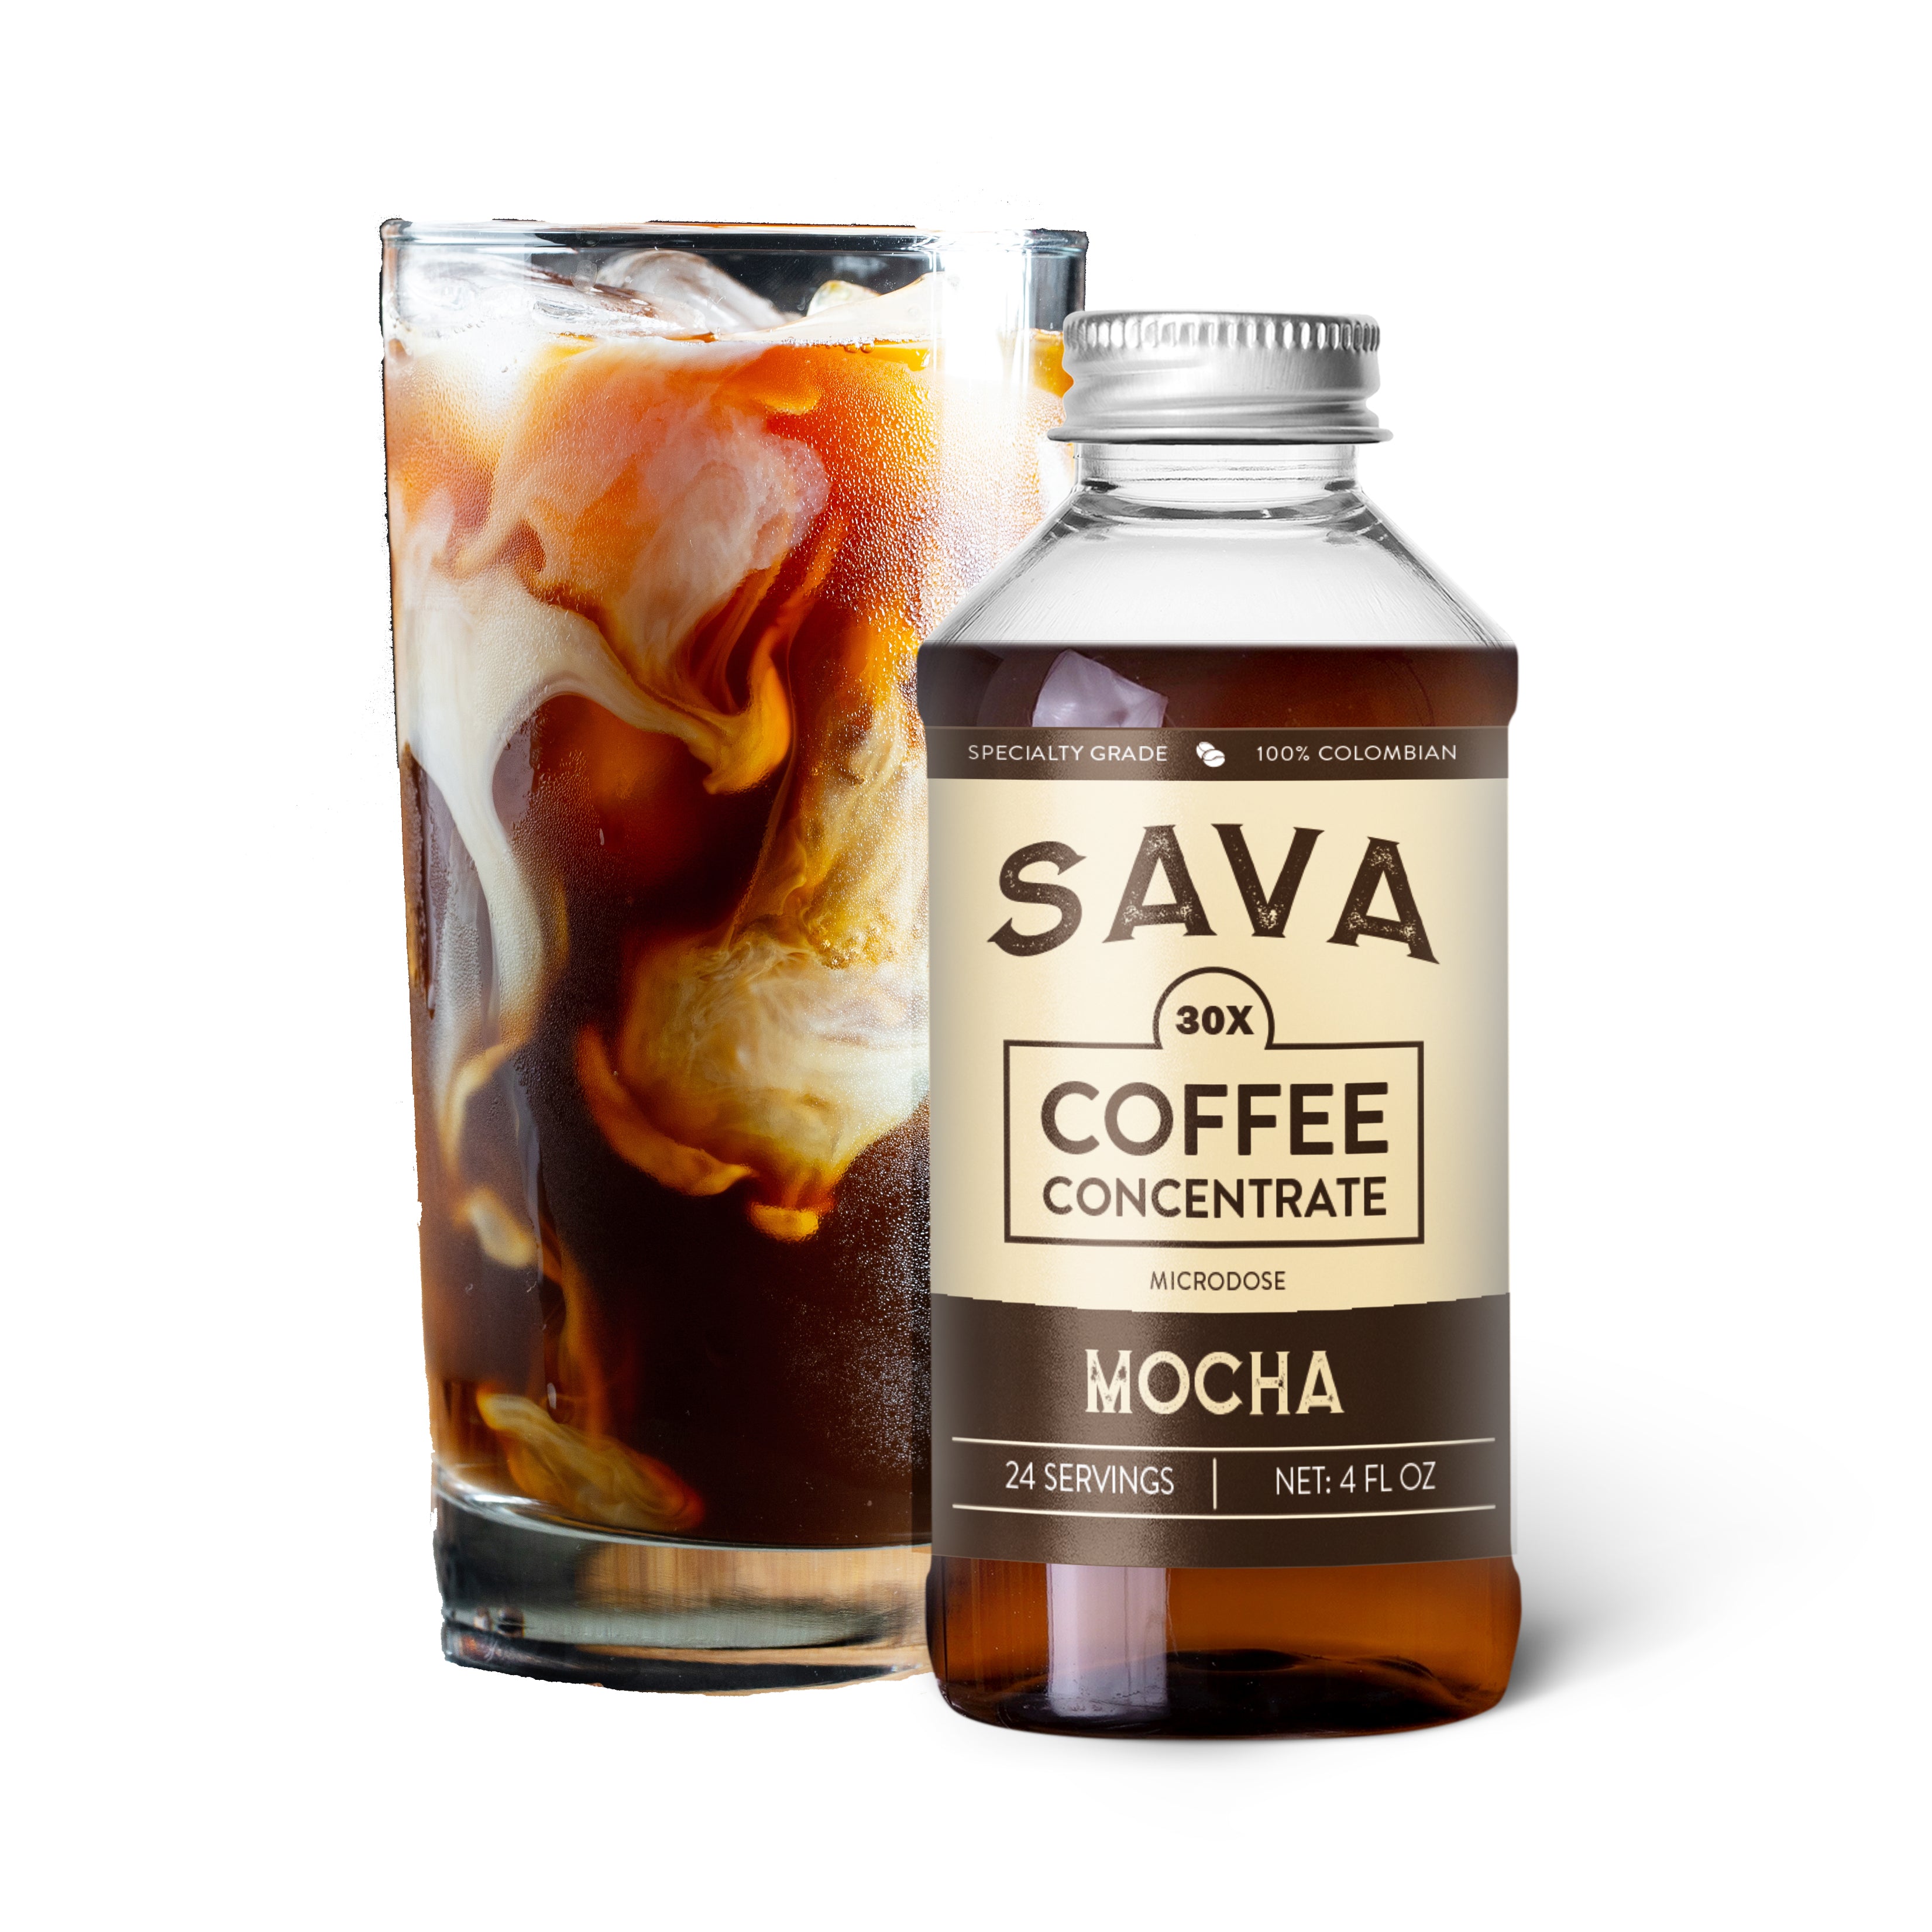 SAVA Cold Brew Coffee Concentrate 30X Mocha 4 ounce volume